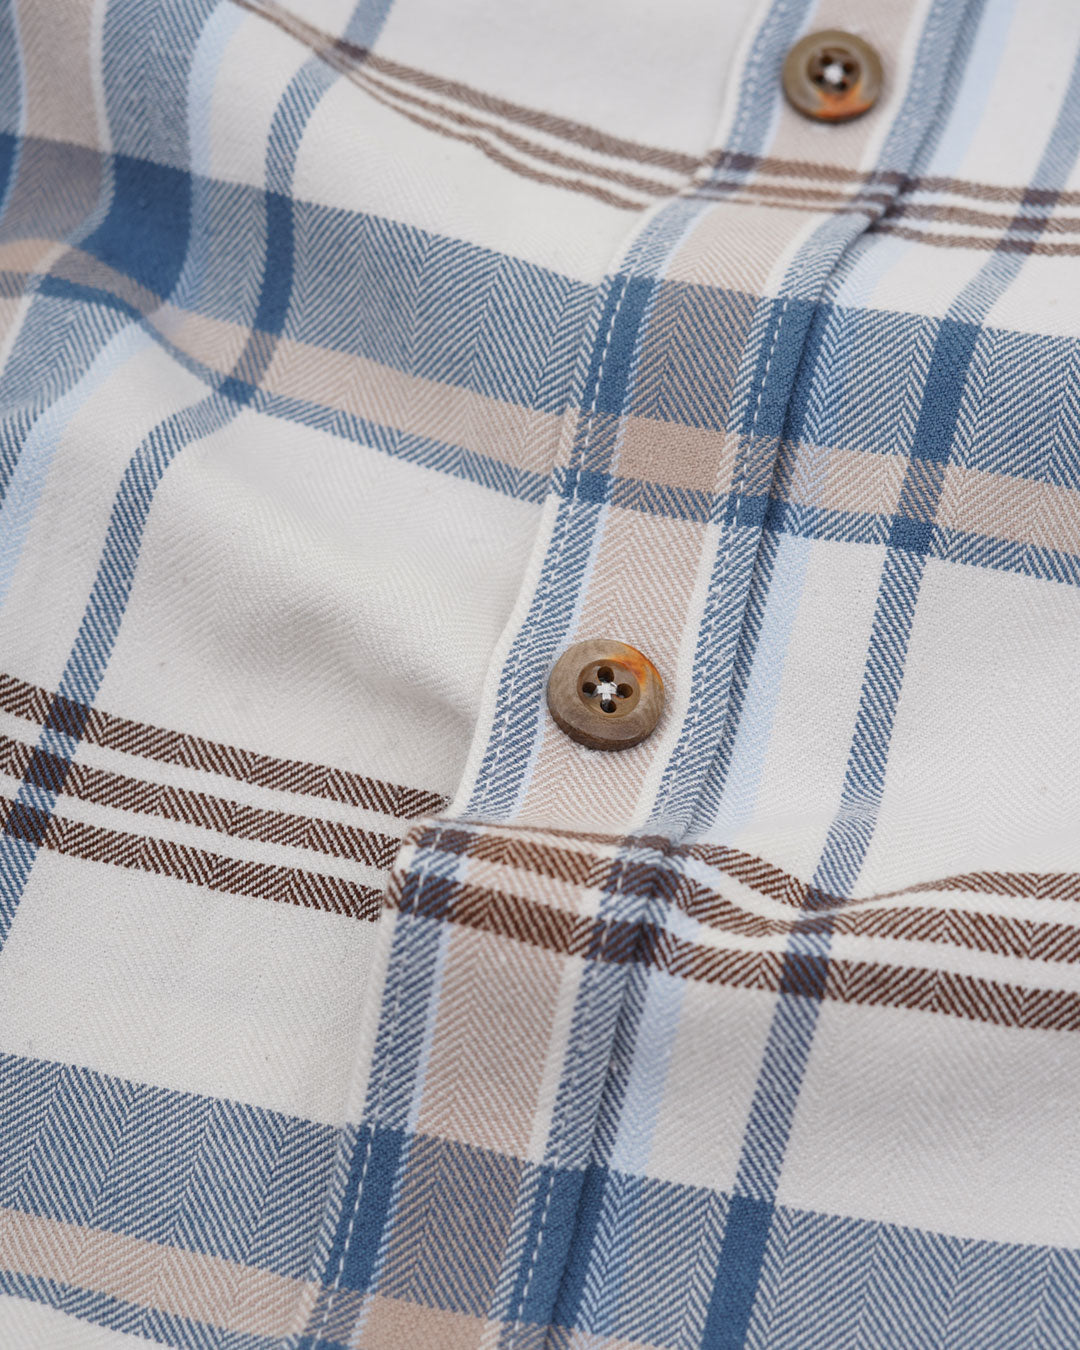 Shirt Check Pattern - Denim Check